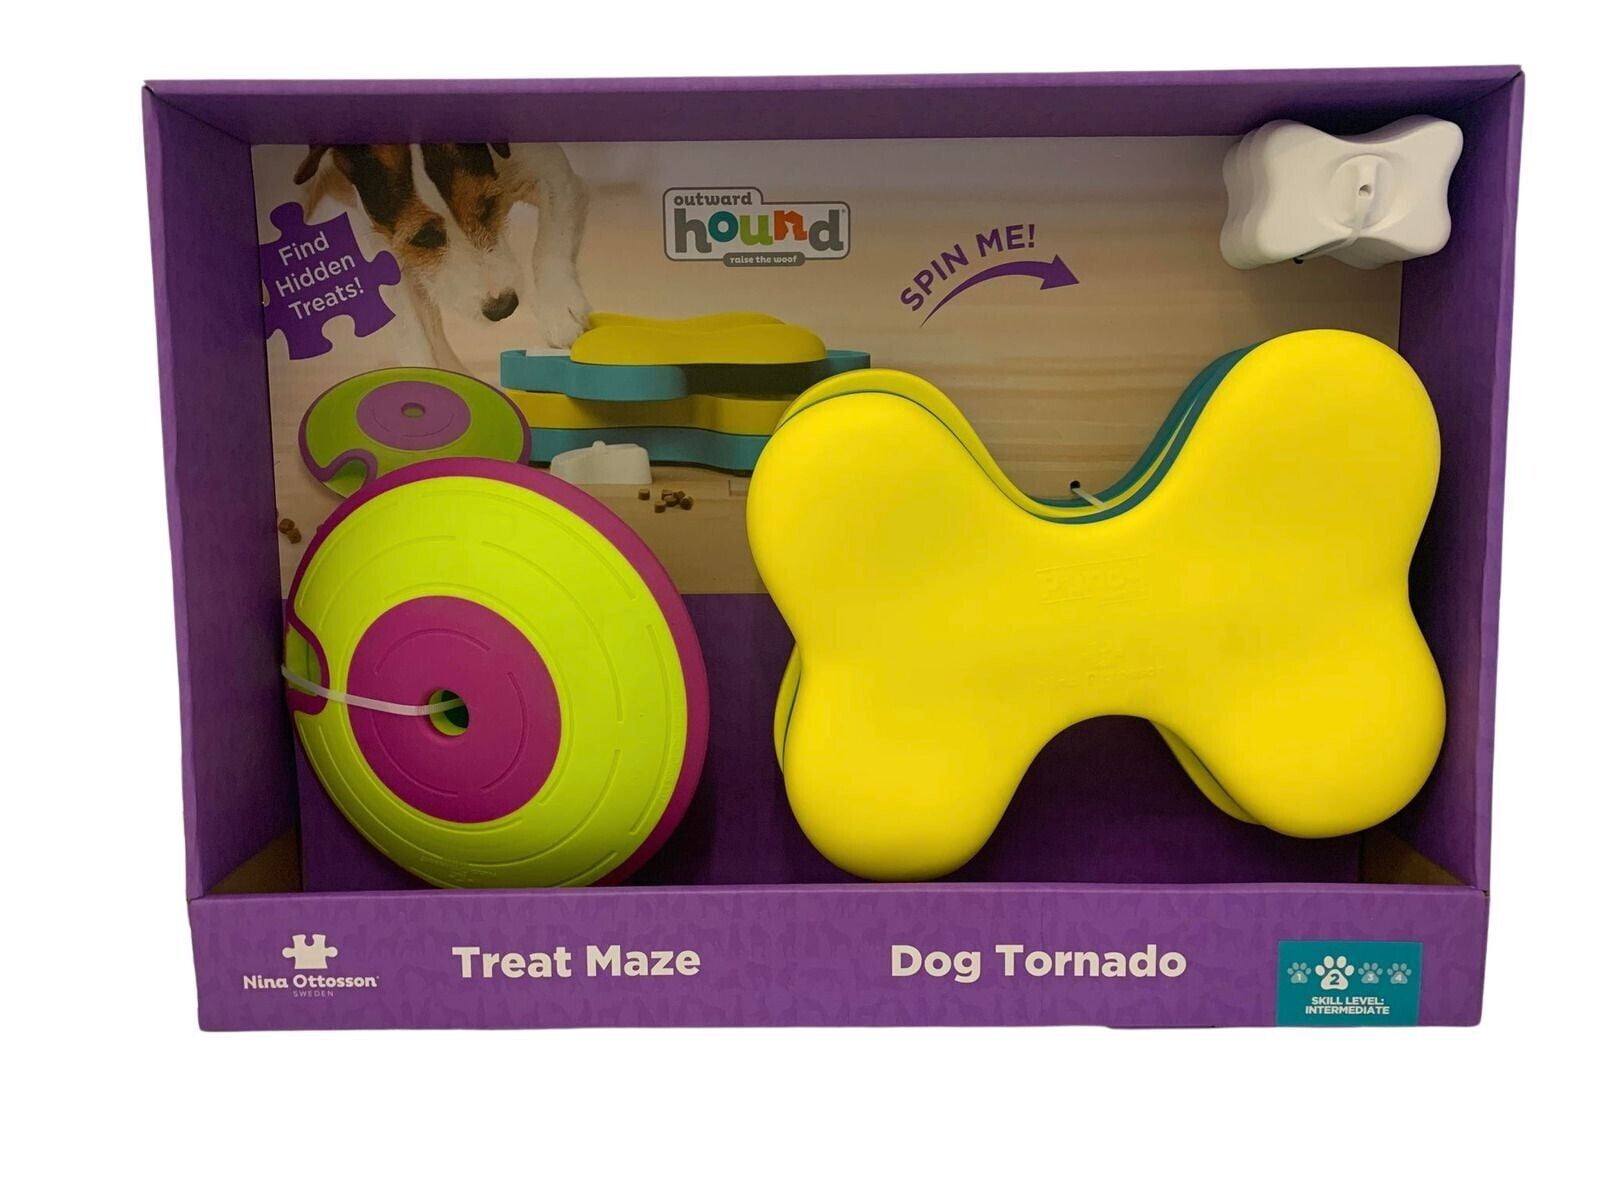 Outward Hound Dog Toy 2PK Dog Treat Maze Dog Tornado Doggy Fun